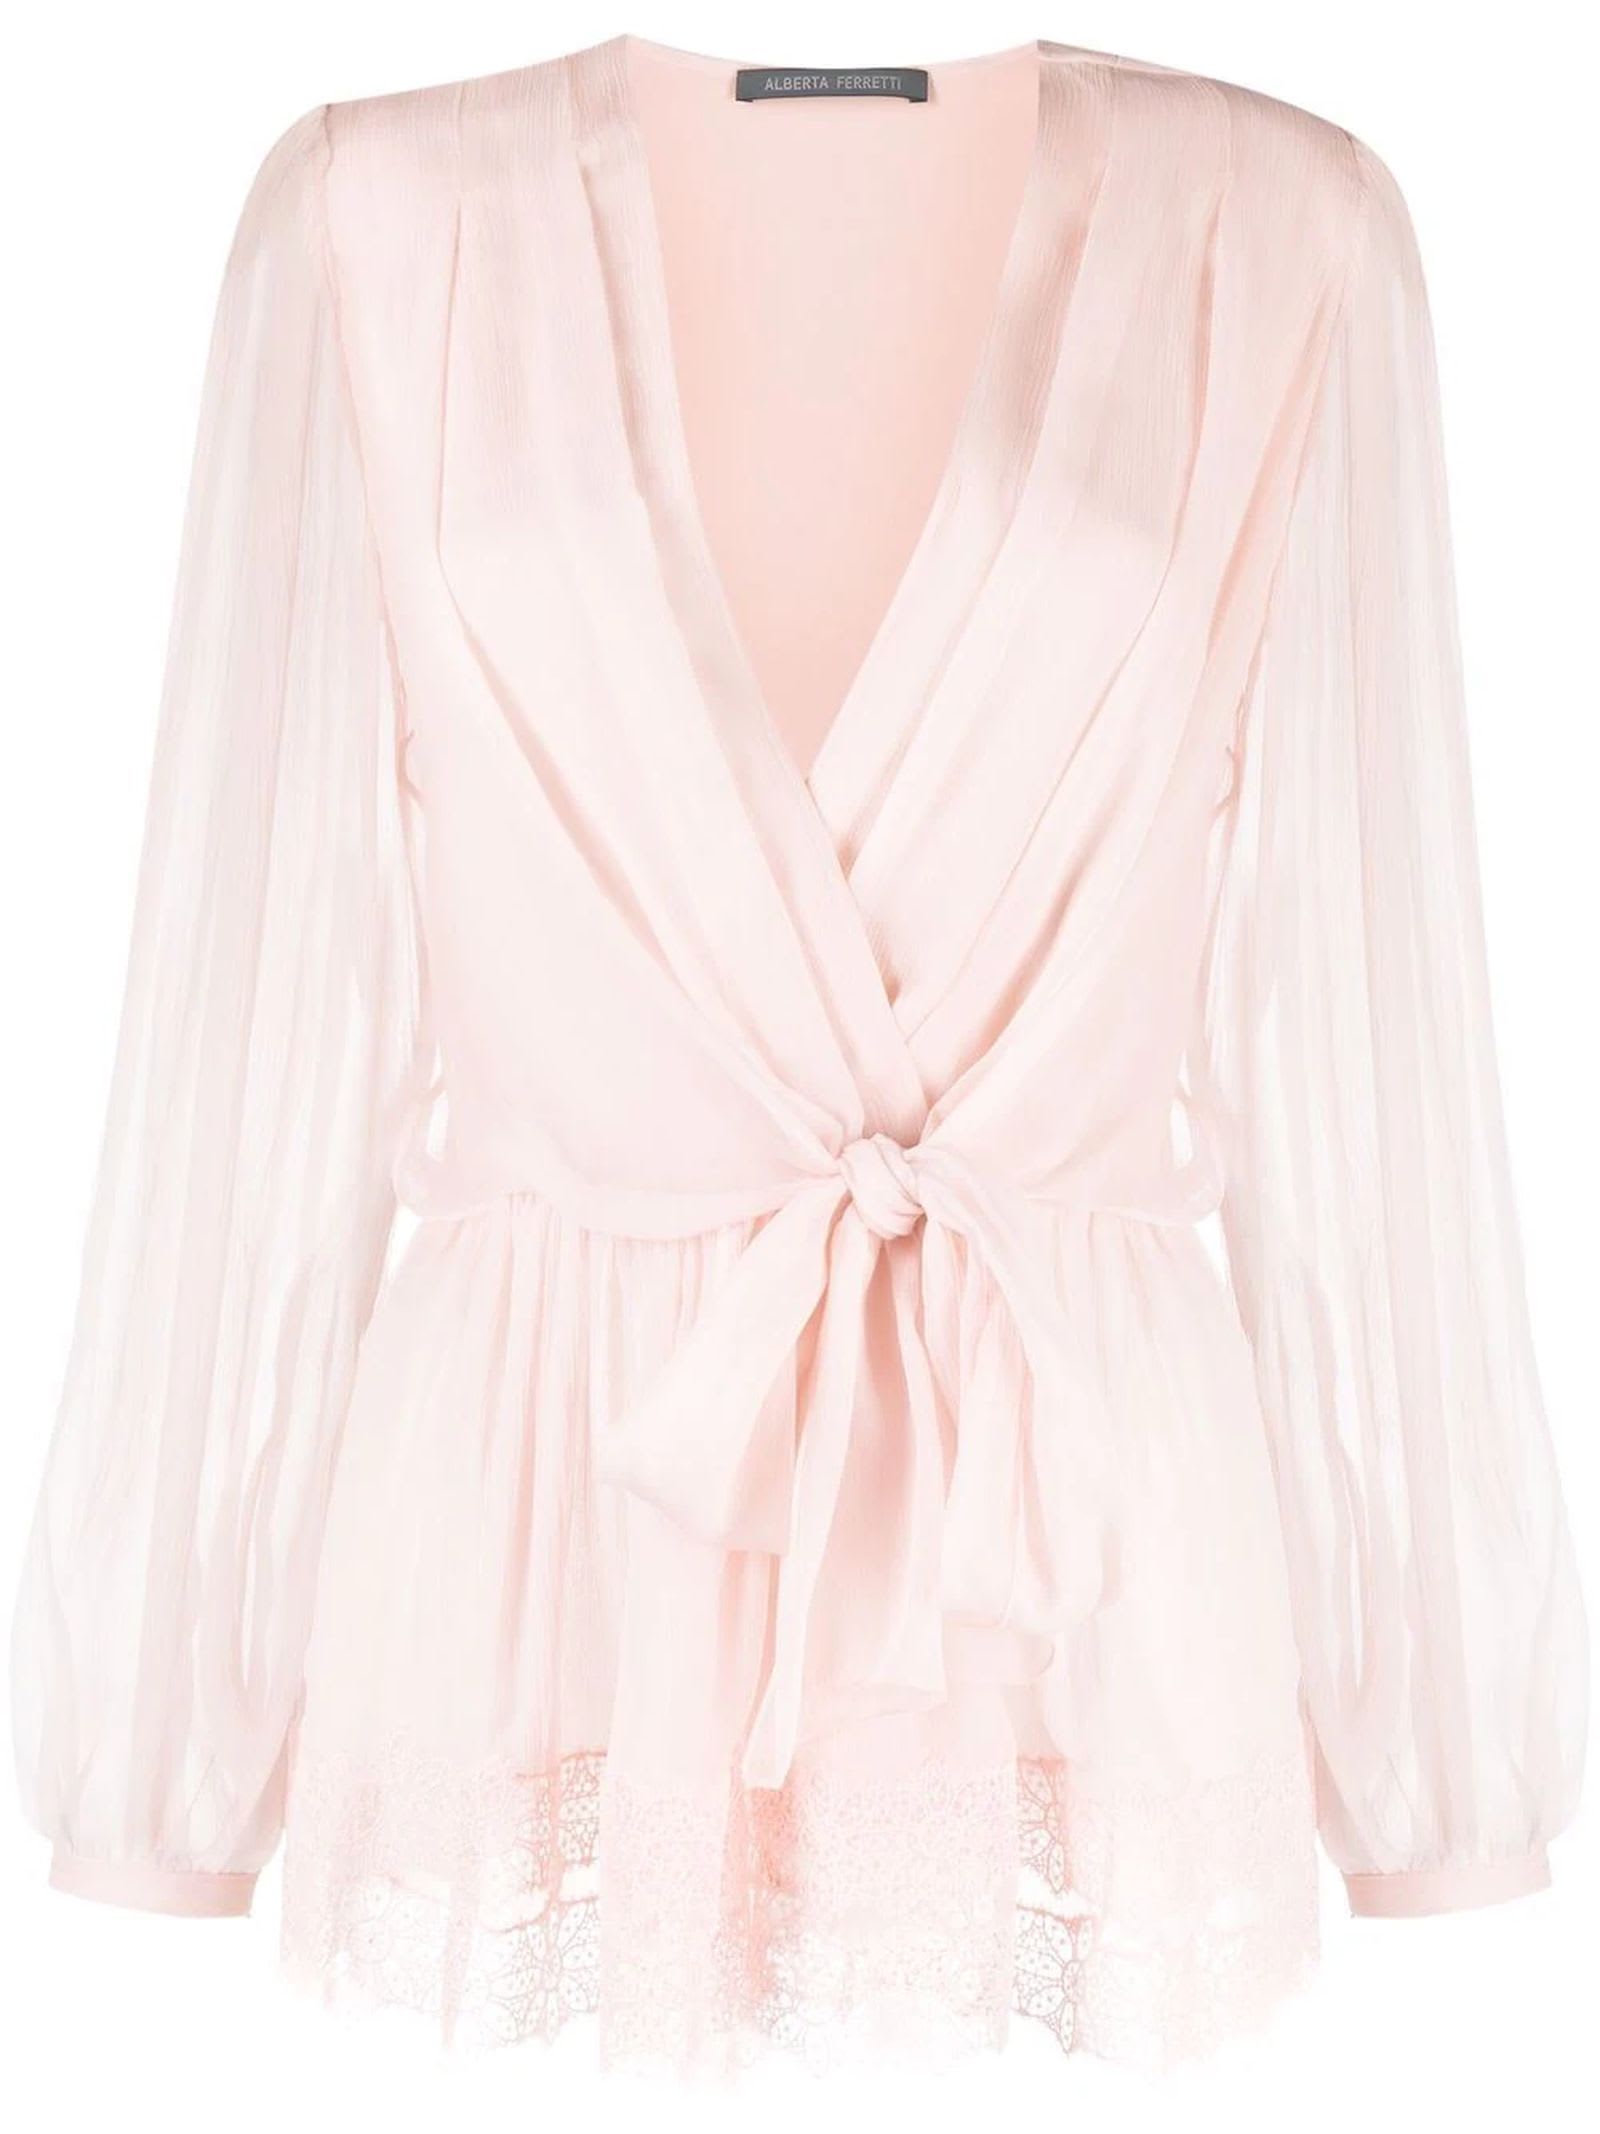 Alberta Ferretti Light Pink Silk Blouse